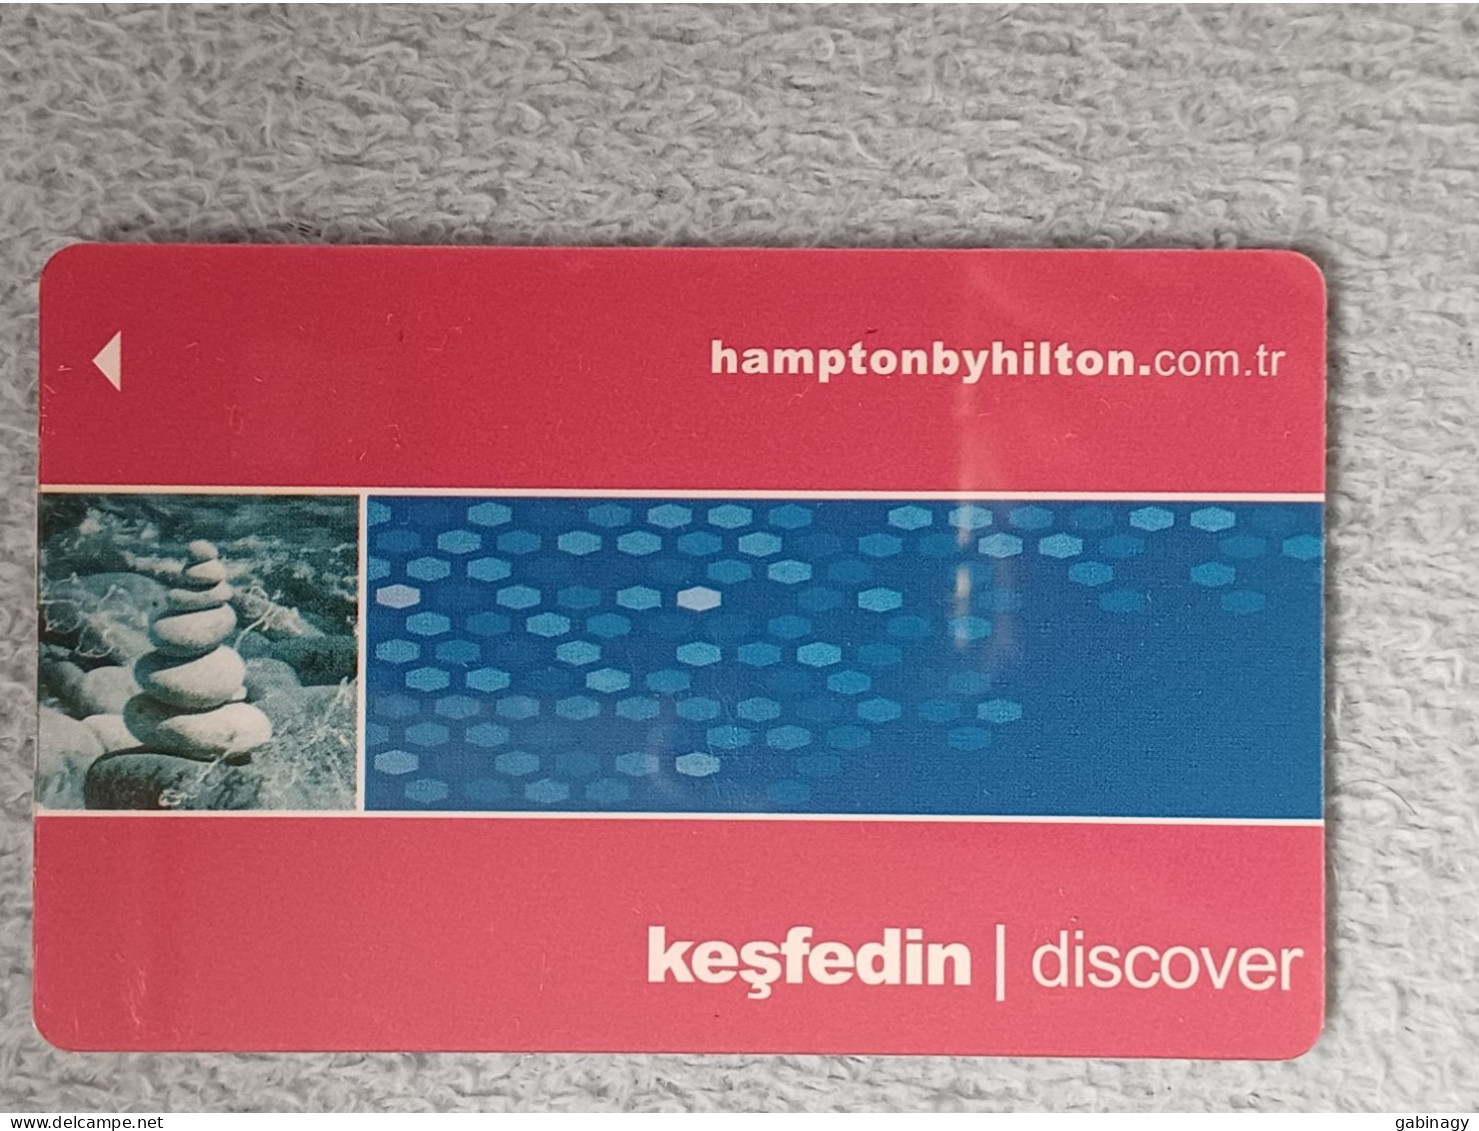 HOTEL KEYS - 2527 - TURKEY - HAMPTON BY HILTON DISCOVER - Cartas De Hotels